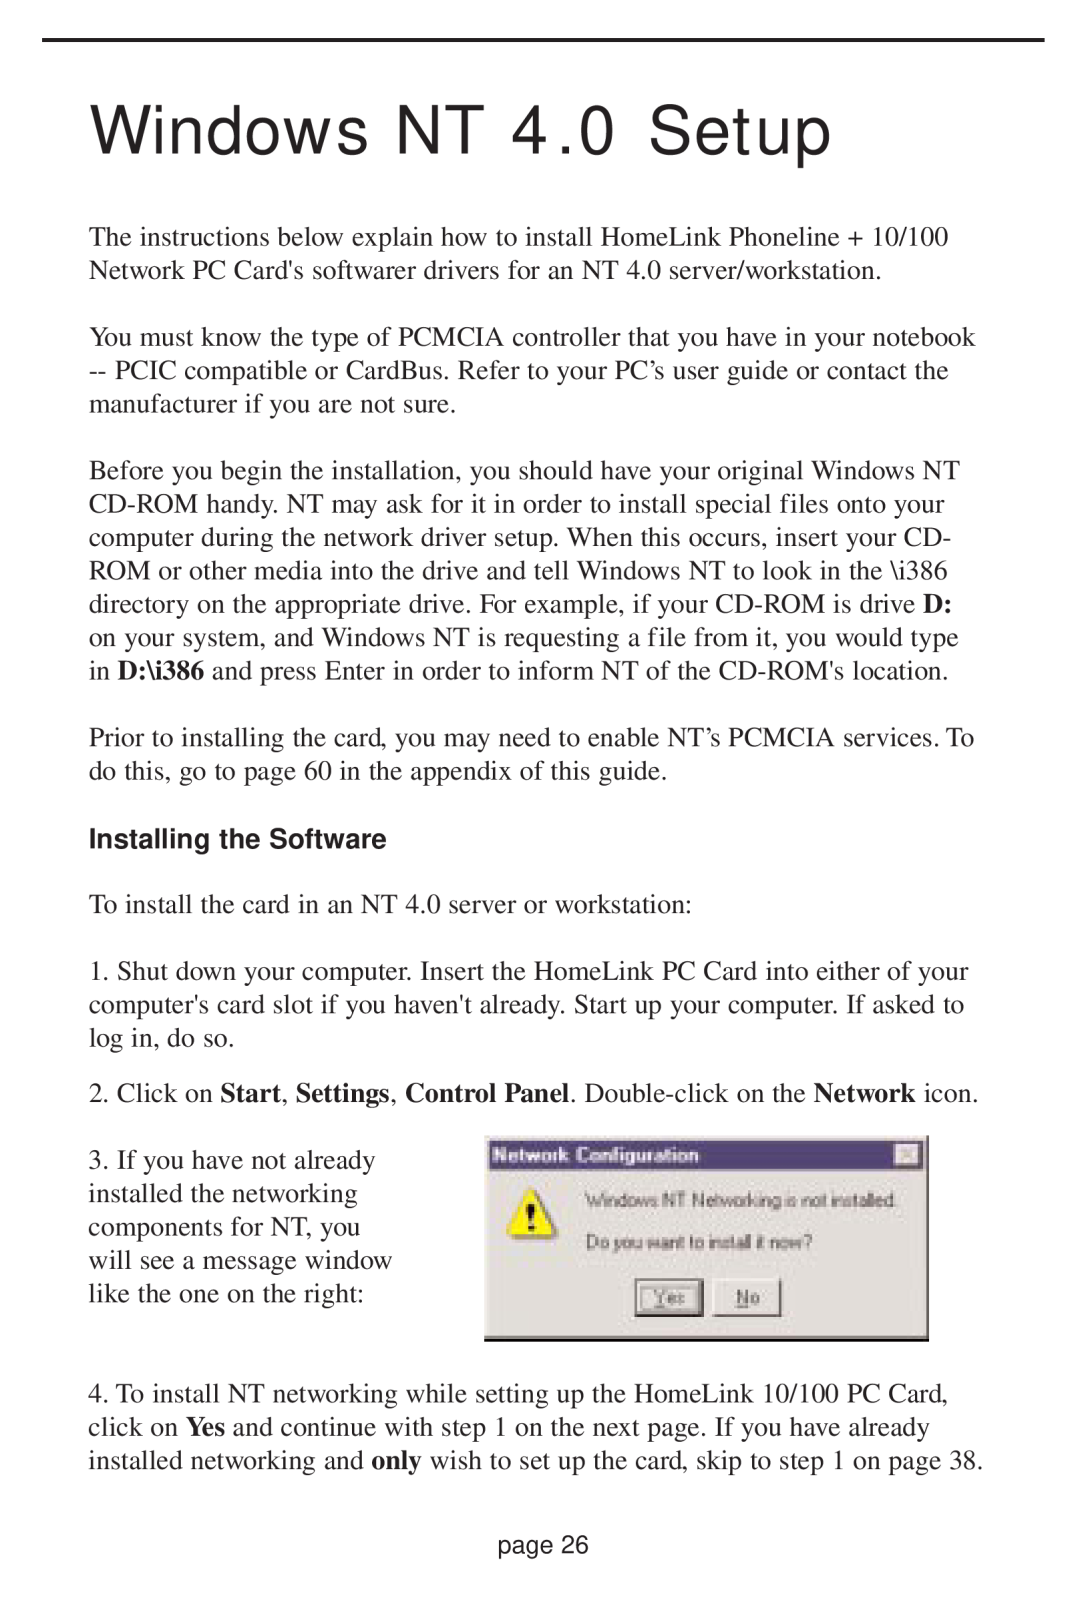 Linksys HPN100 manual Windows NT 4.0 Setup, Installing the Software 